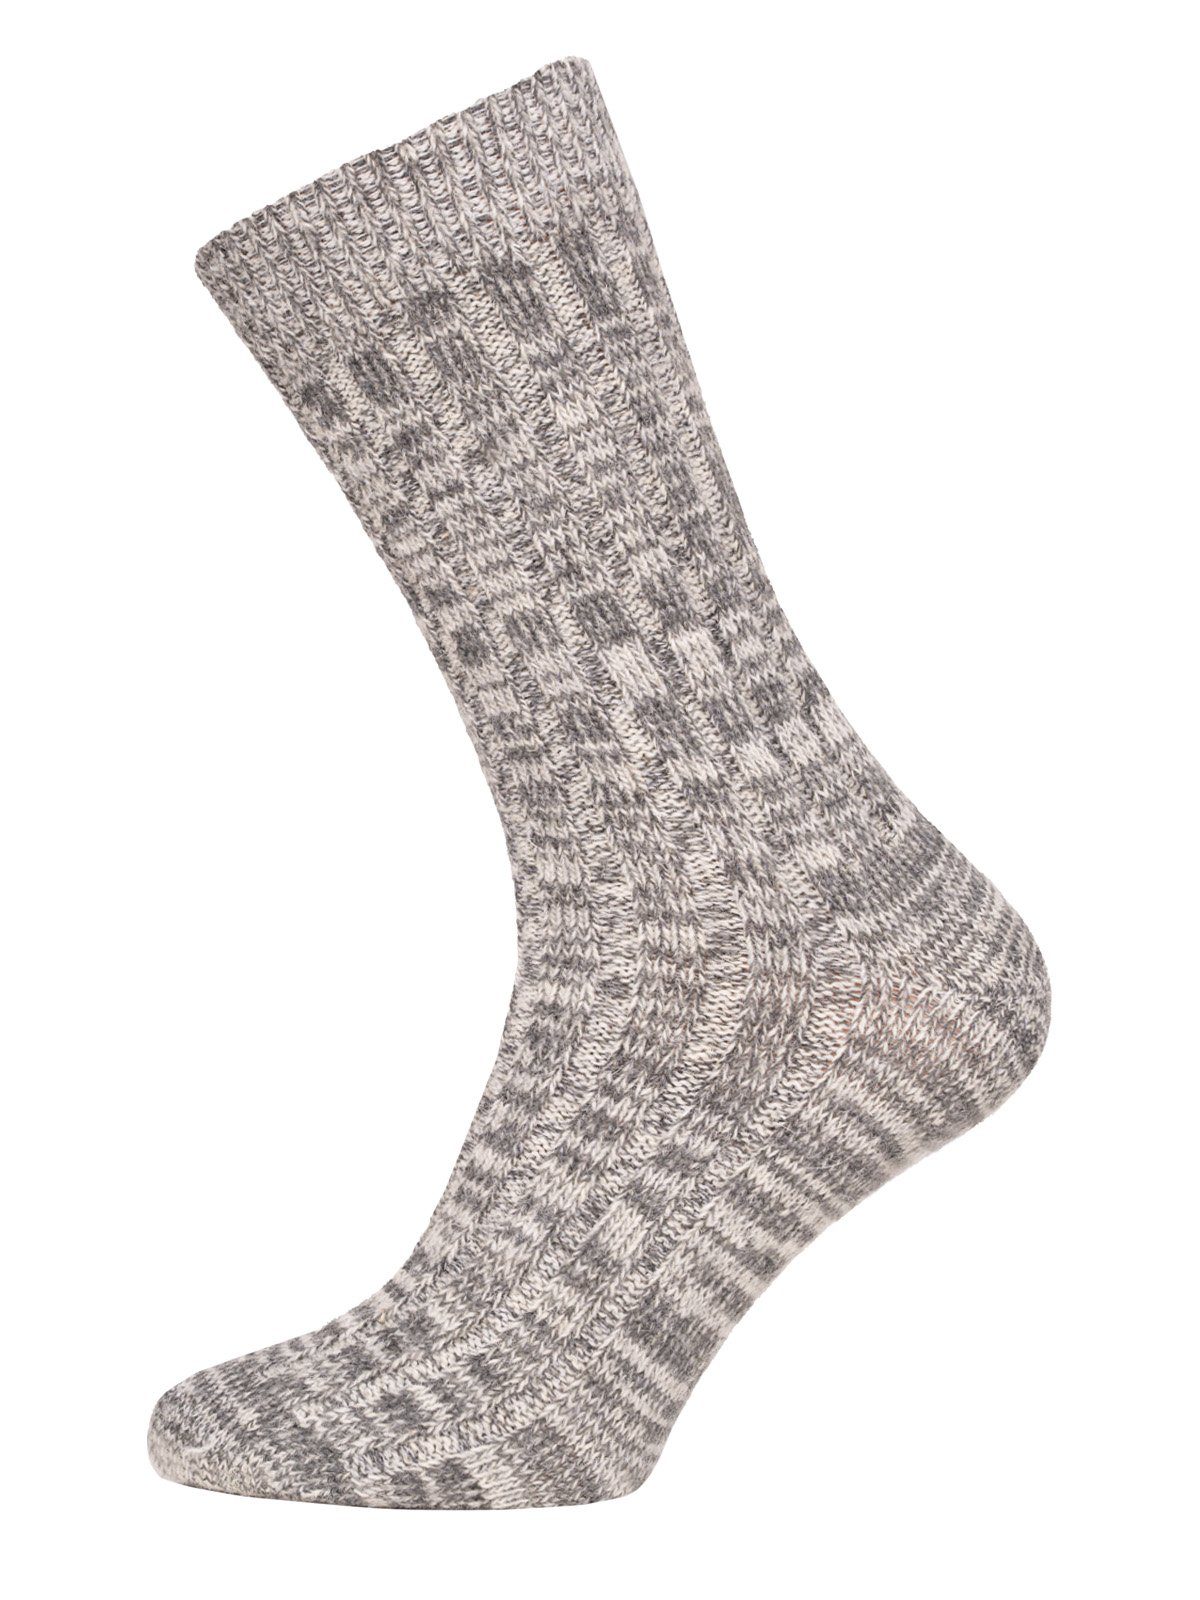 aus Wollsocken Paar) Grau (Schurwolle) 1 Melierte Dünne Wollsocken Socken Wolle HomeOfSocks und mit 75% Wollanteil (Paar, warme 75%